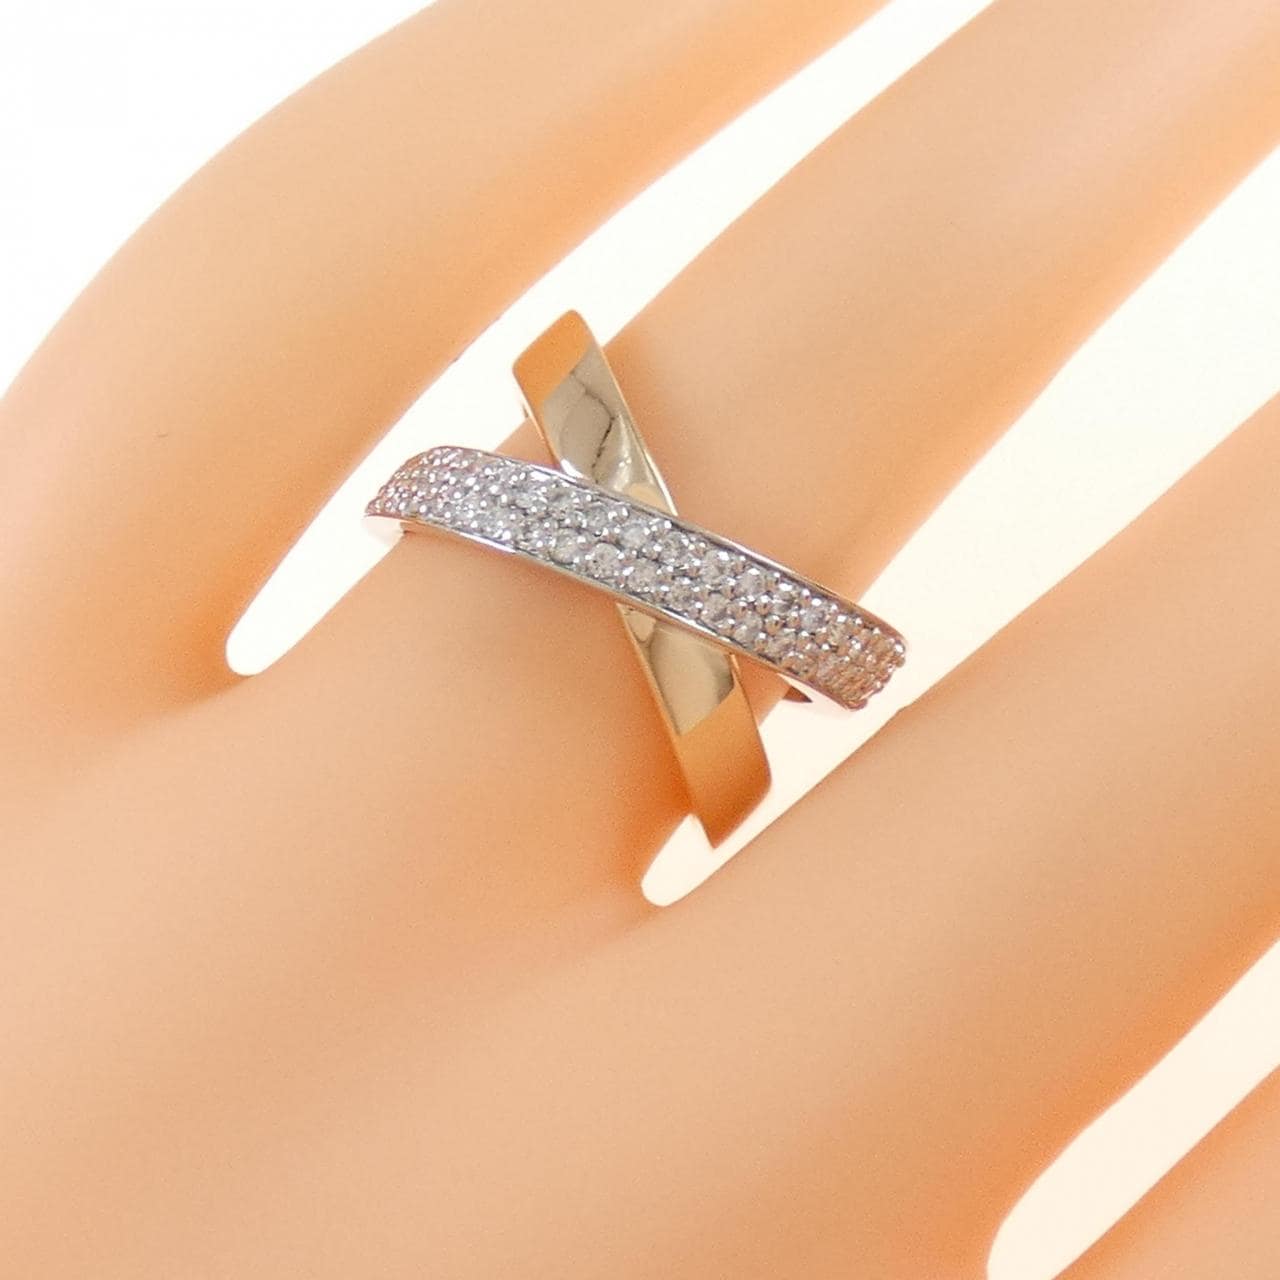 VENDOME Diamond Ring 0.46CT